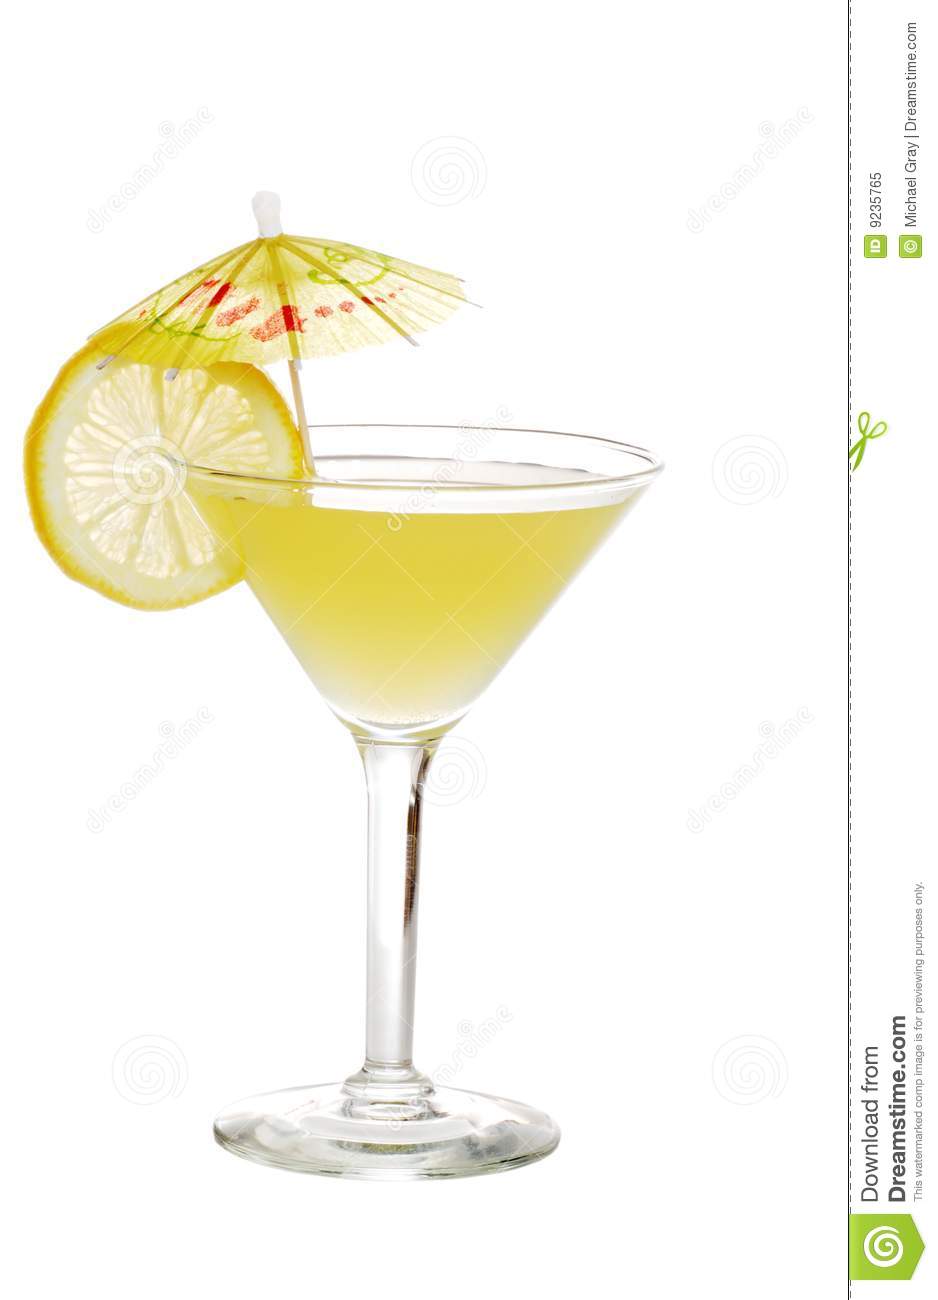 Lemon Martini With A Slice Of Lemon Royalty Free Stock Photo   Image    